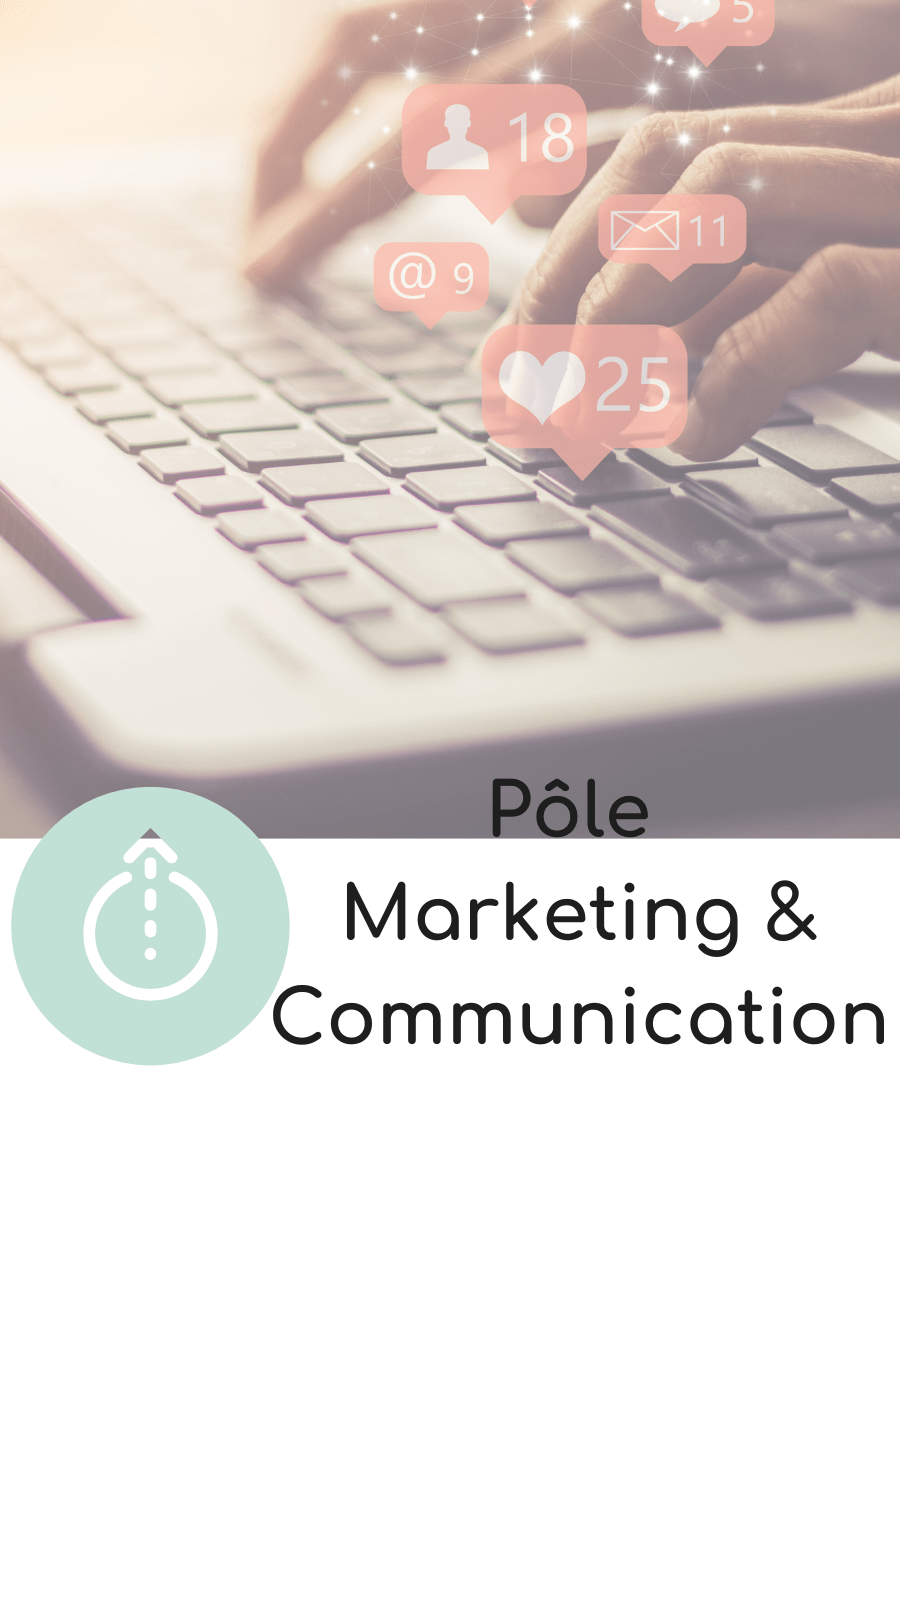 offre-pole-marketing-communication-entreprise-gestion-back-office